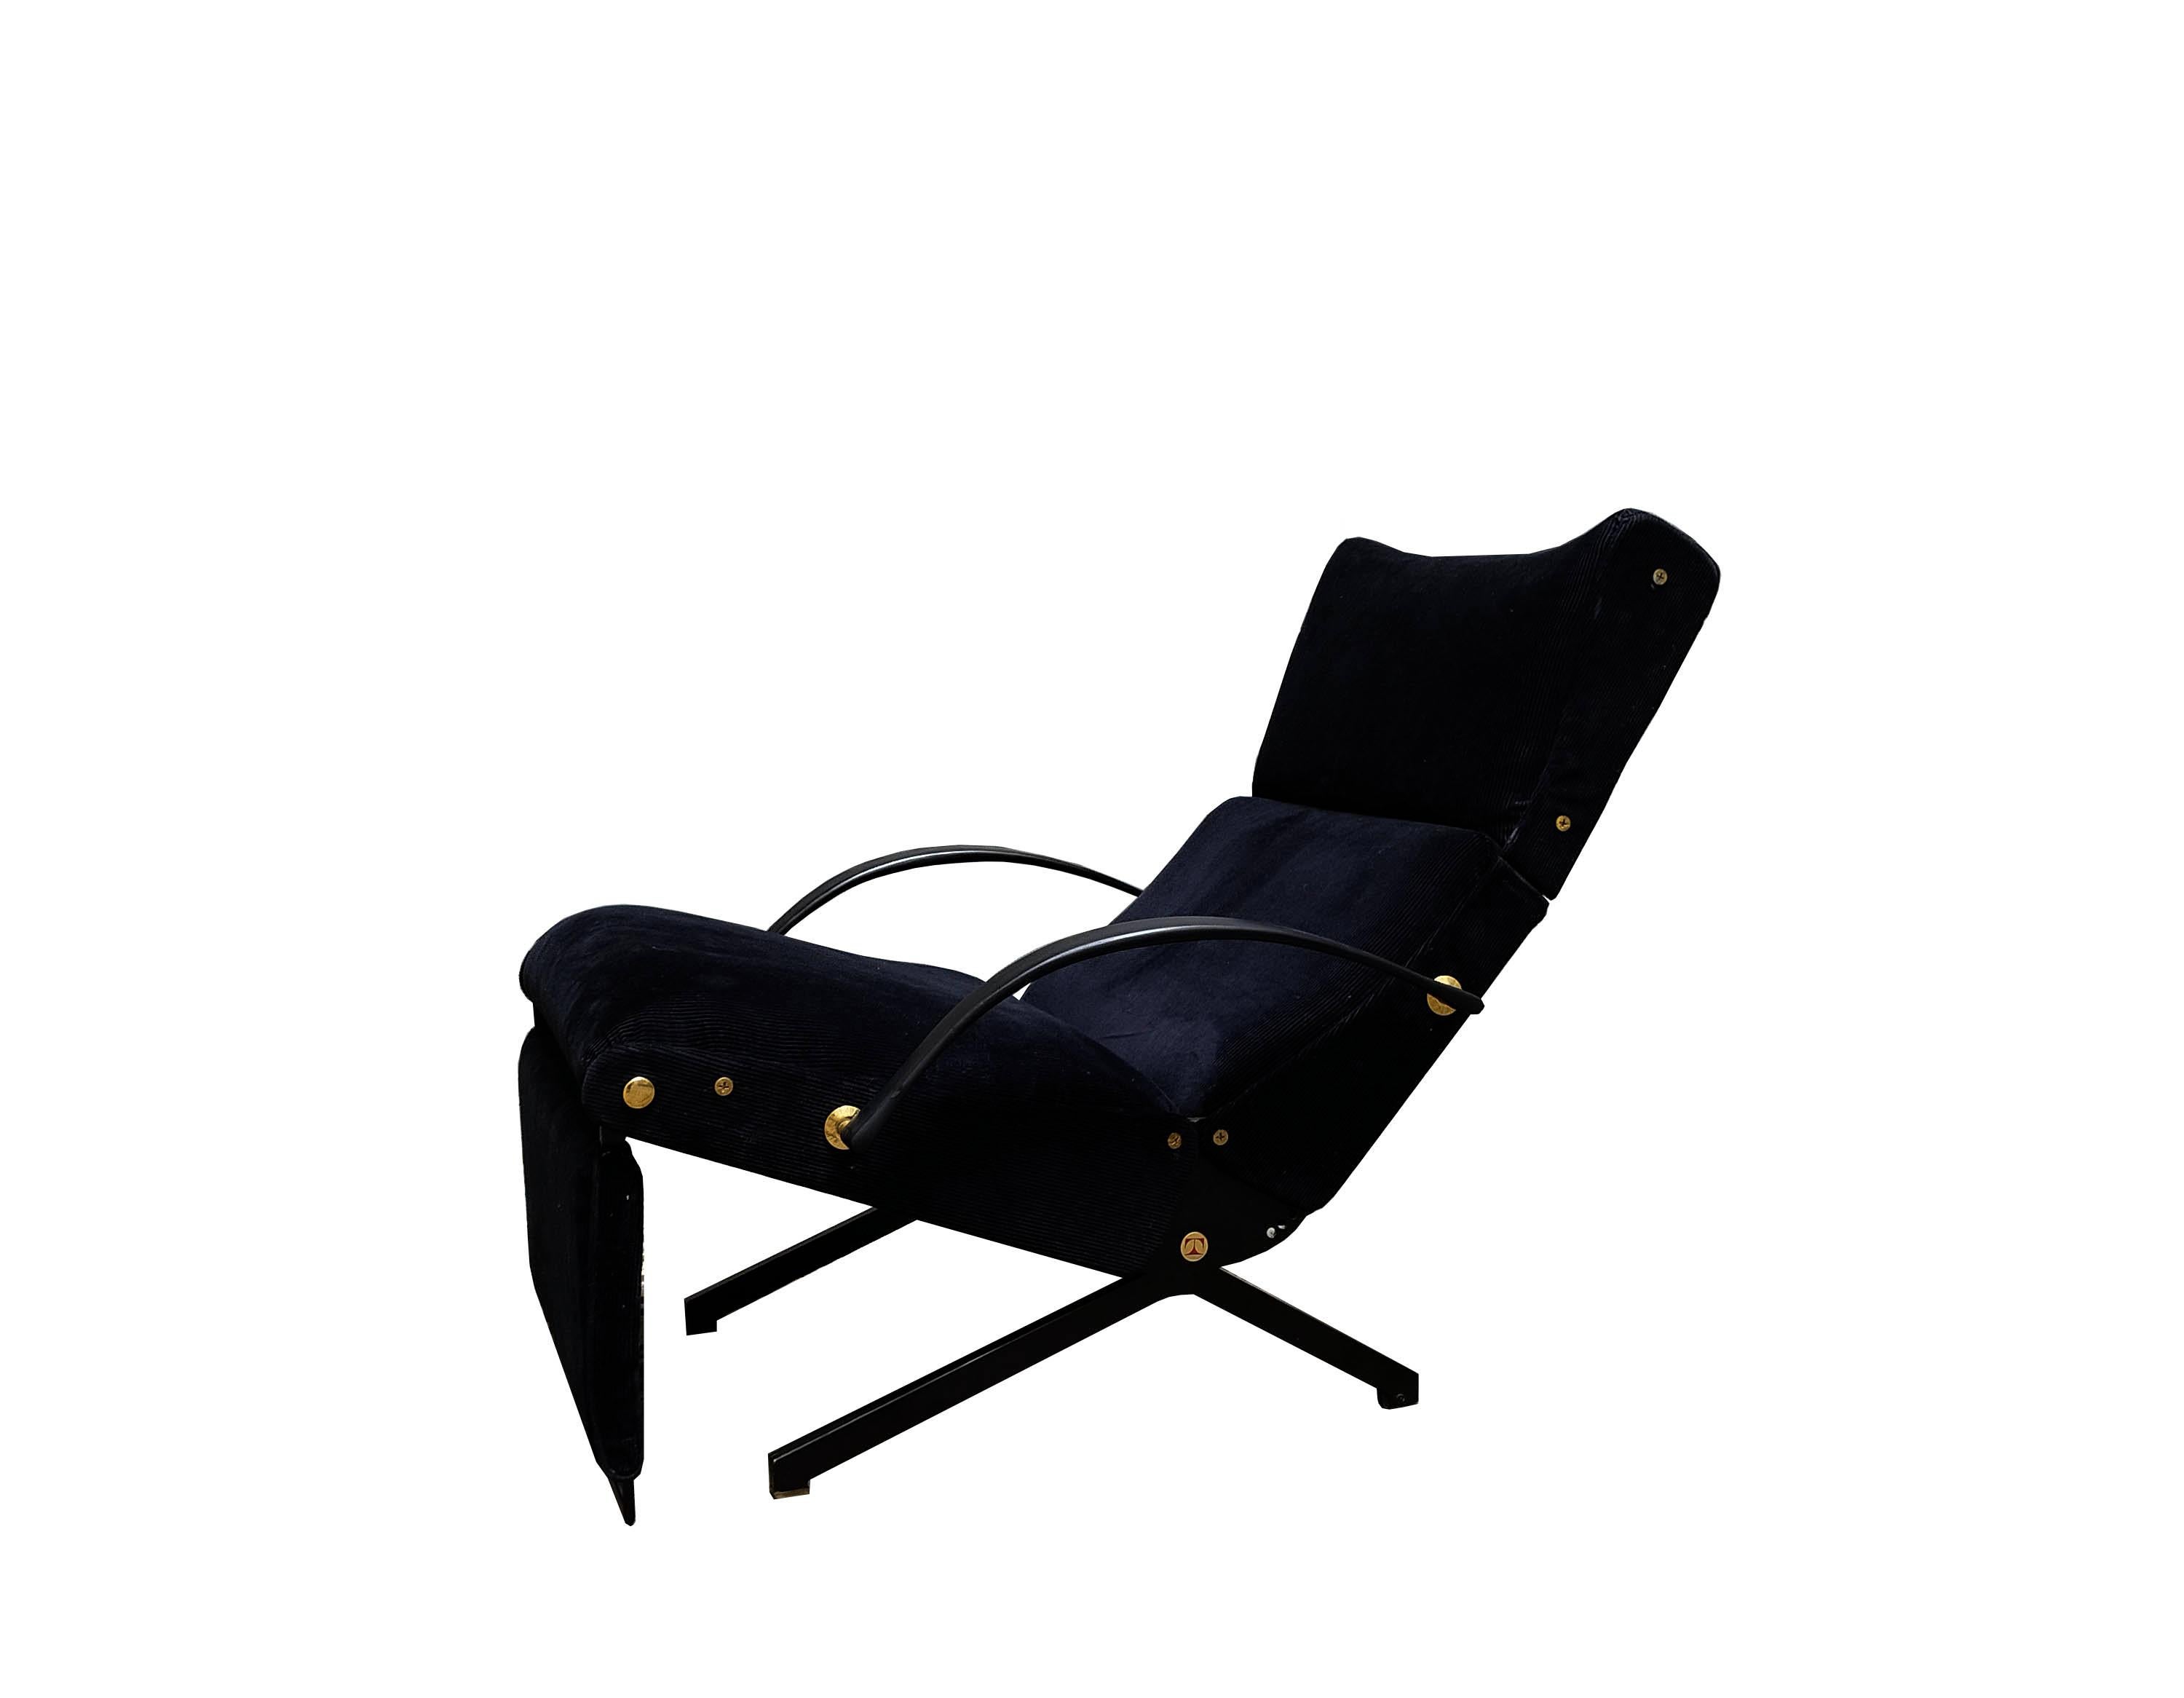 Italian Osvaldo Borsani for Tecno ‘P40' Lounge Chair, Italy, 1955